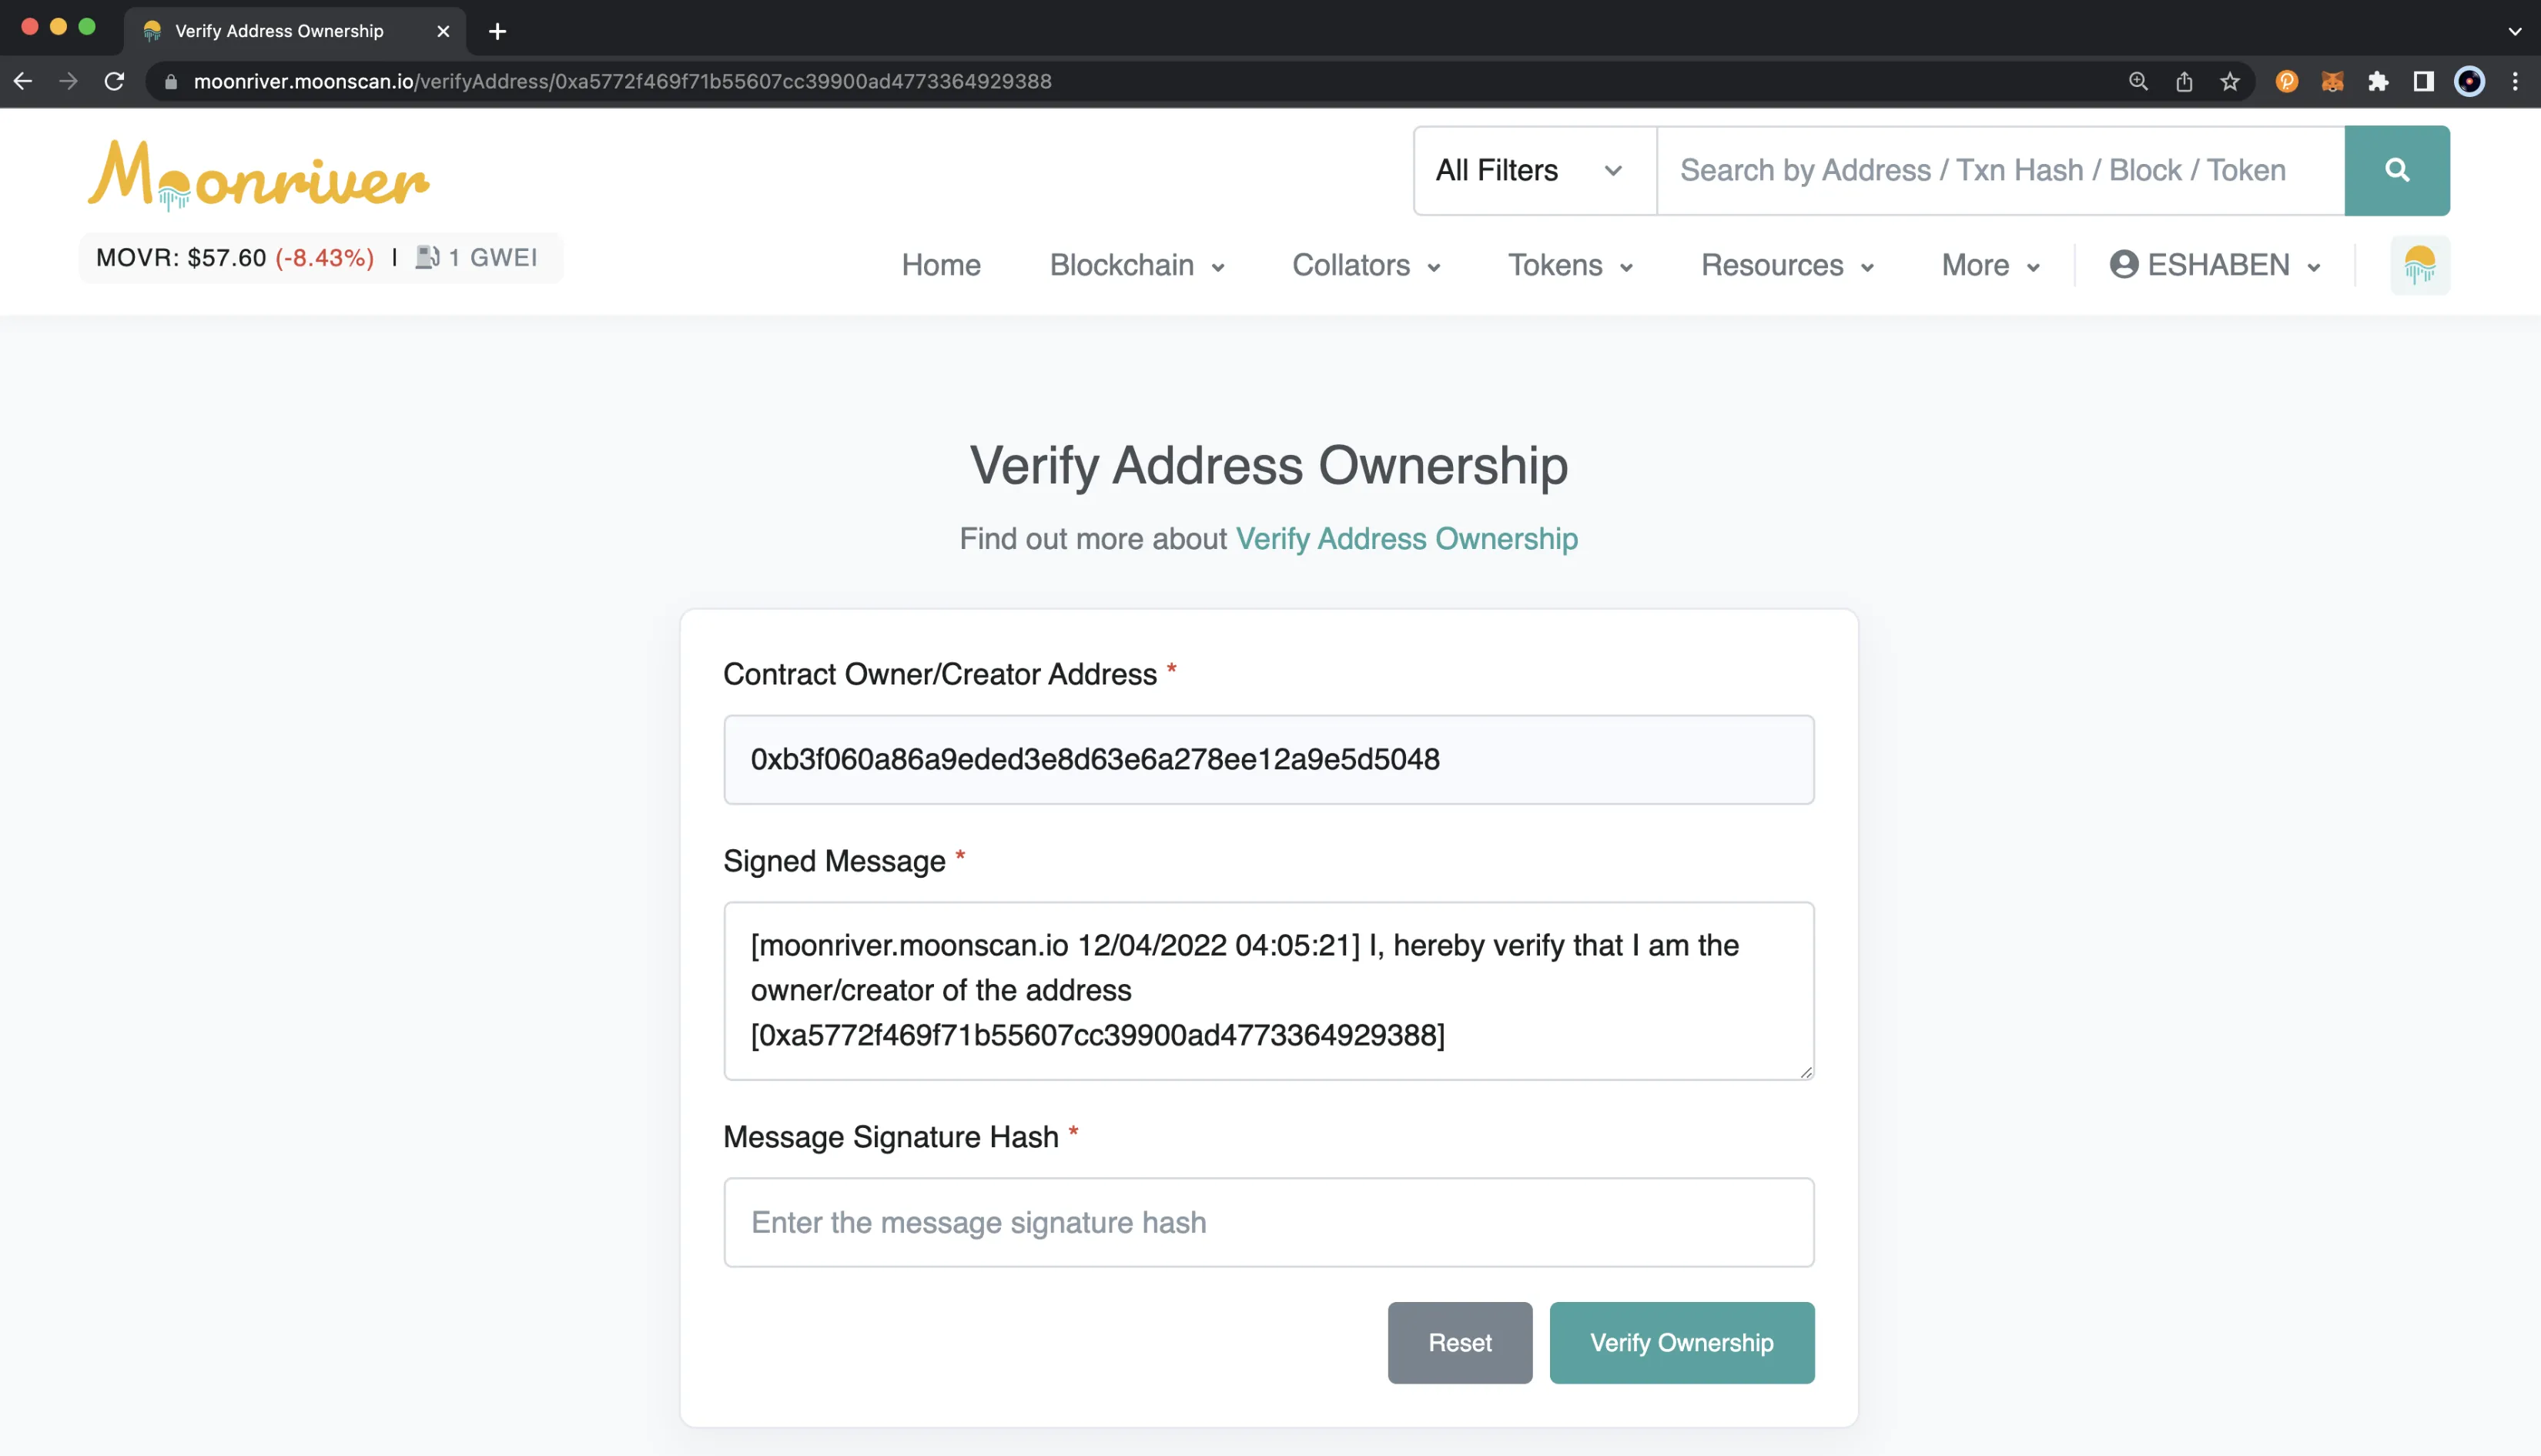 Manually verify address ownership